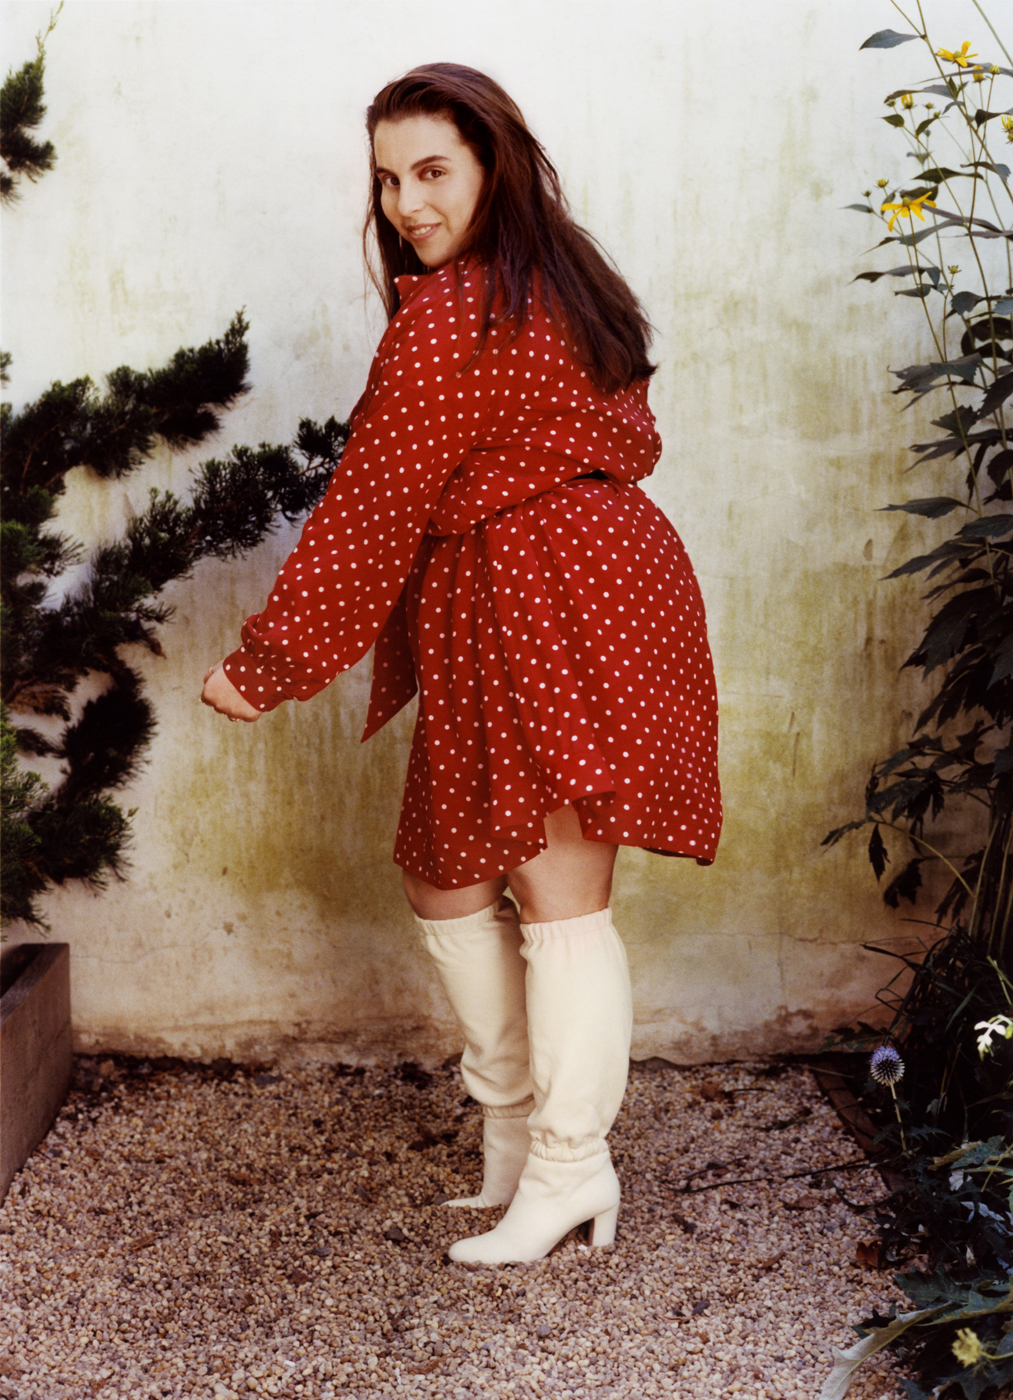 Beanie Feldstein in a red polka dress